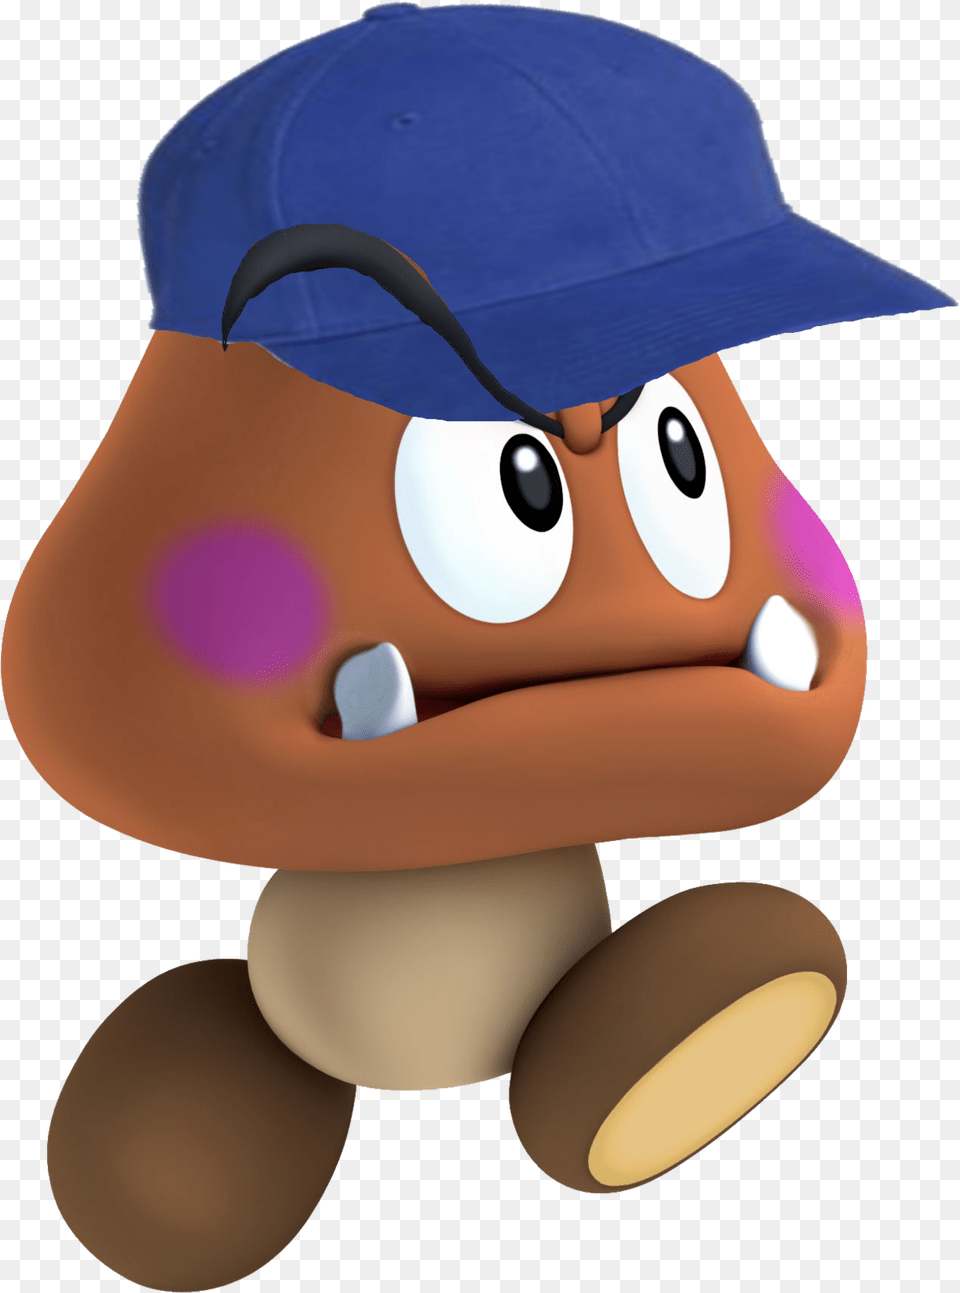 Goombas Super Mario 64 Bloopers Fanon Wiki Goomba Mario, Baseball Cap, Cap, Clothing, Hat Free Png